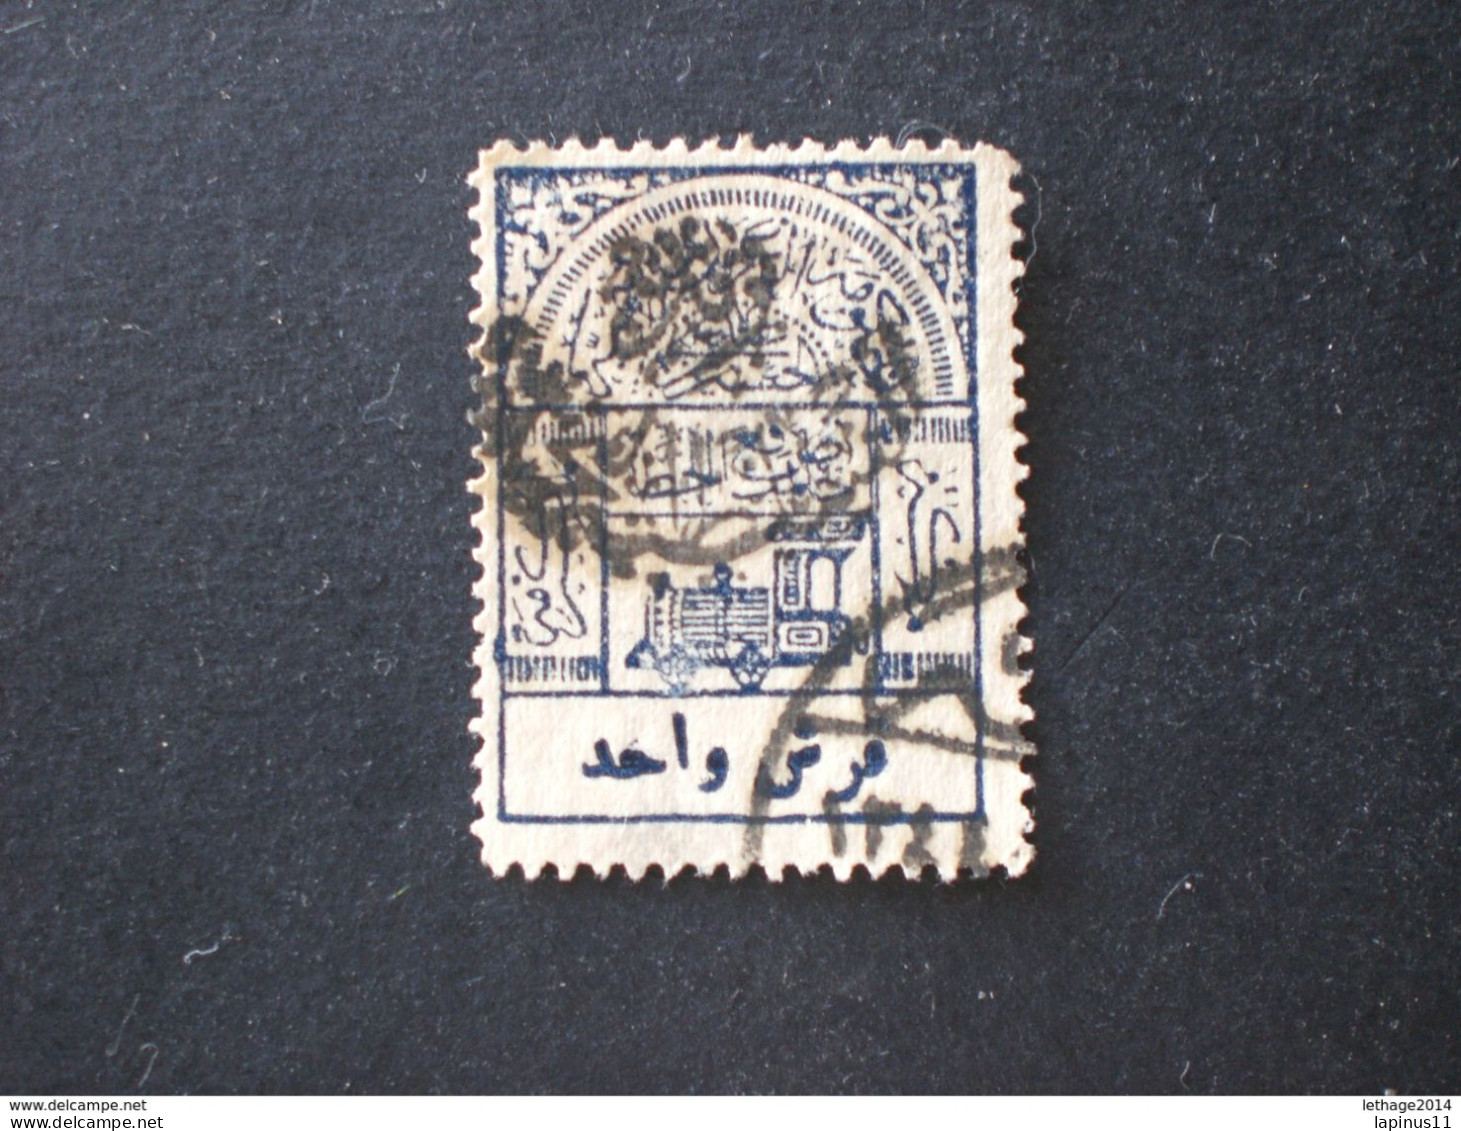 SAUDI ARABIA NEJD 1925 REVENUE STAMPS OF TURKEY AND HEJAZ WITH ARCHED HANDSTAMP OVERPRINT AL SALTANA EL NEDJD - Saudi Arabia